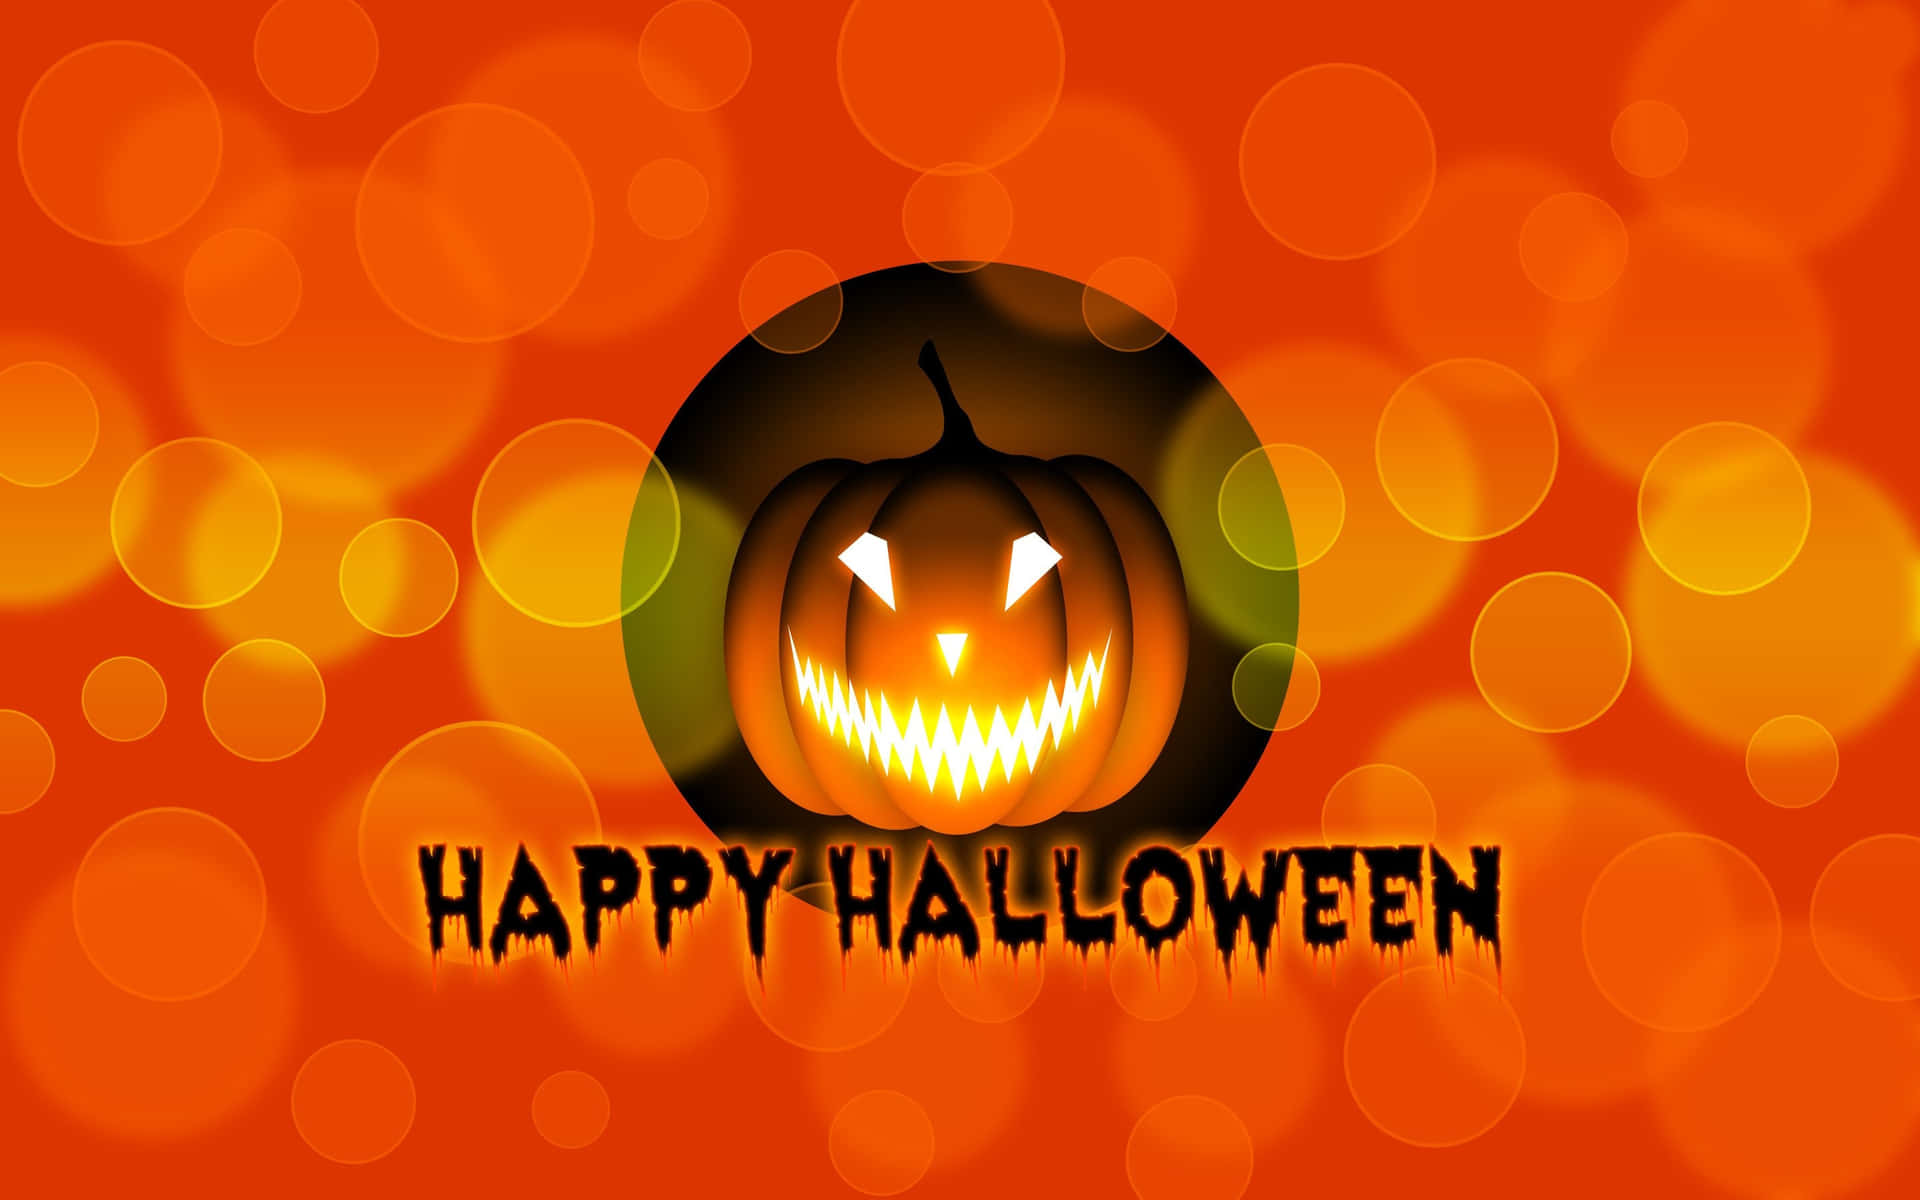 Happy Halloween Pumpkin With Creepy Smile Picture